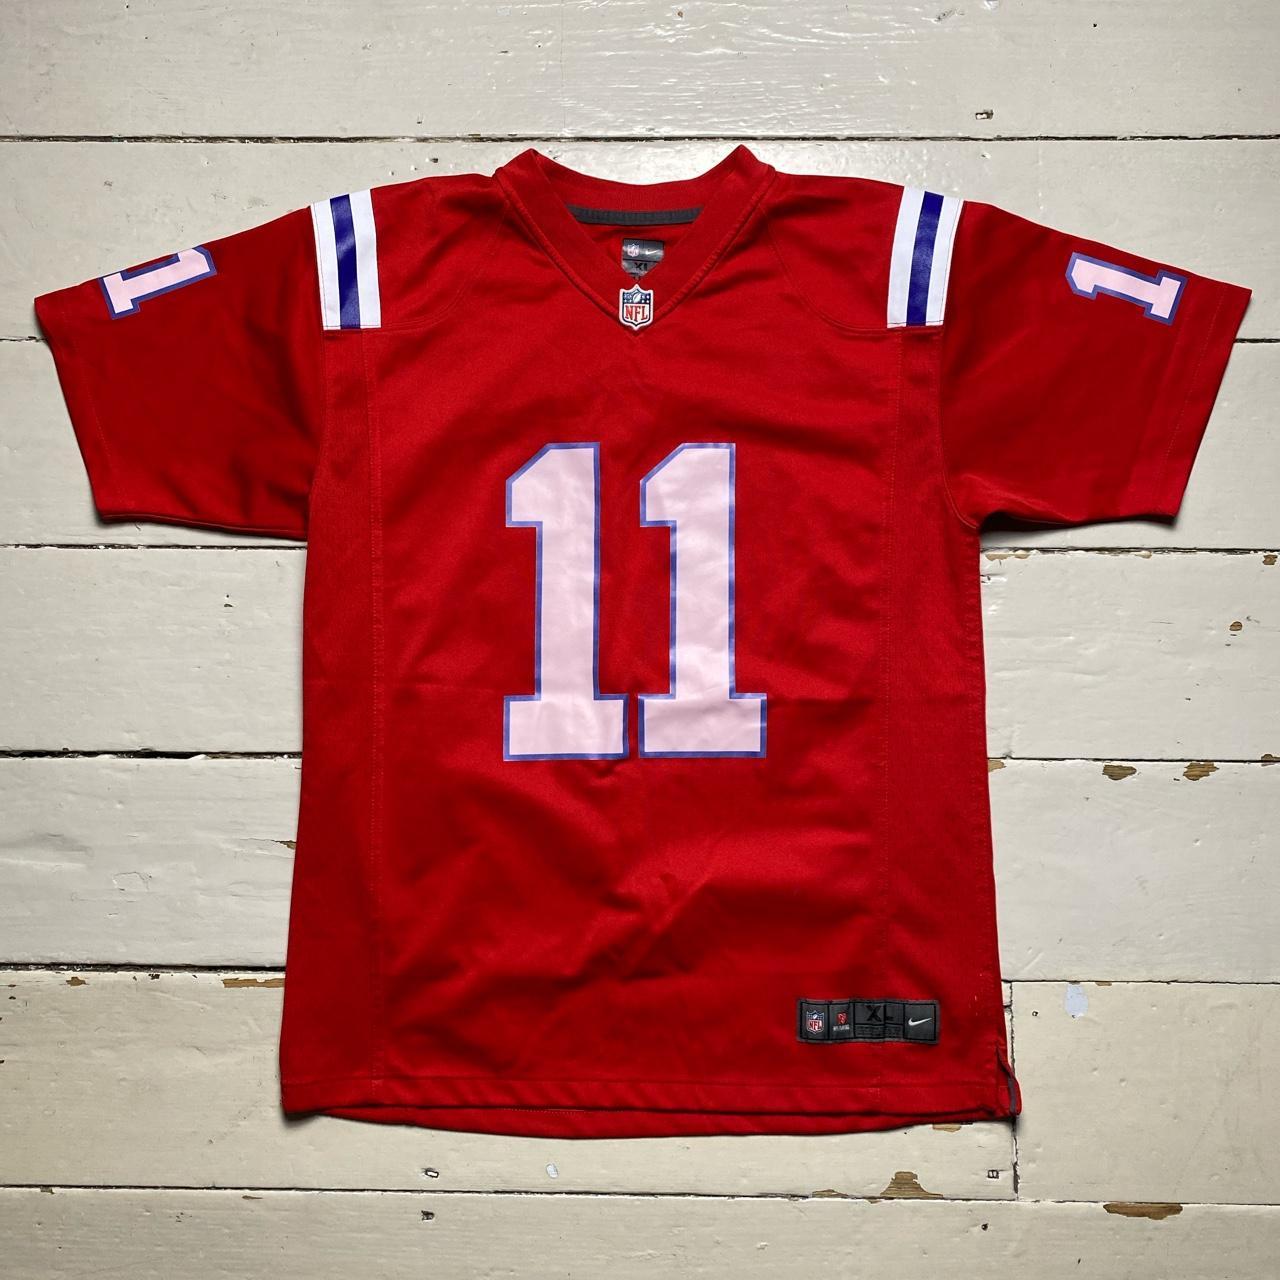 Nike NFL Julian Edelman Patriots Number 11 Red Jersey